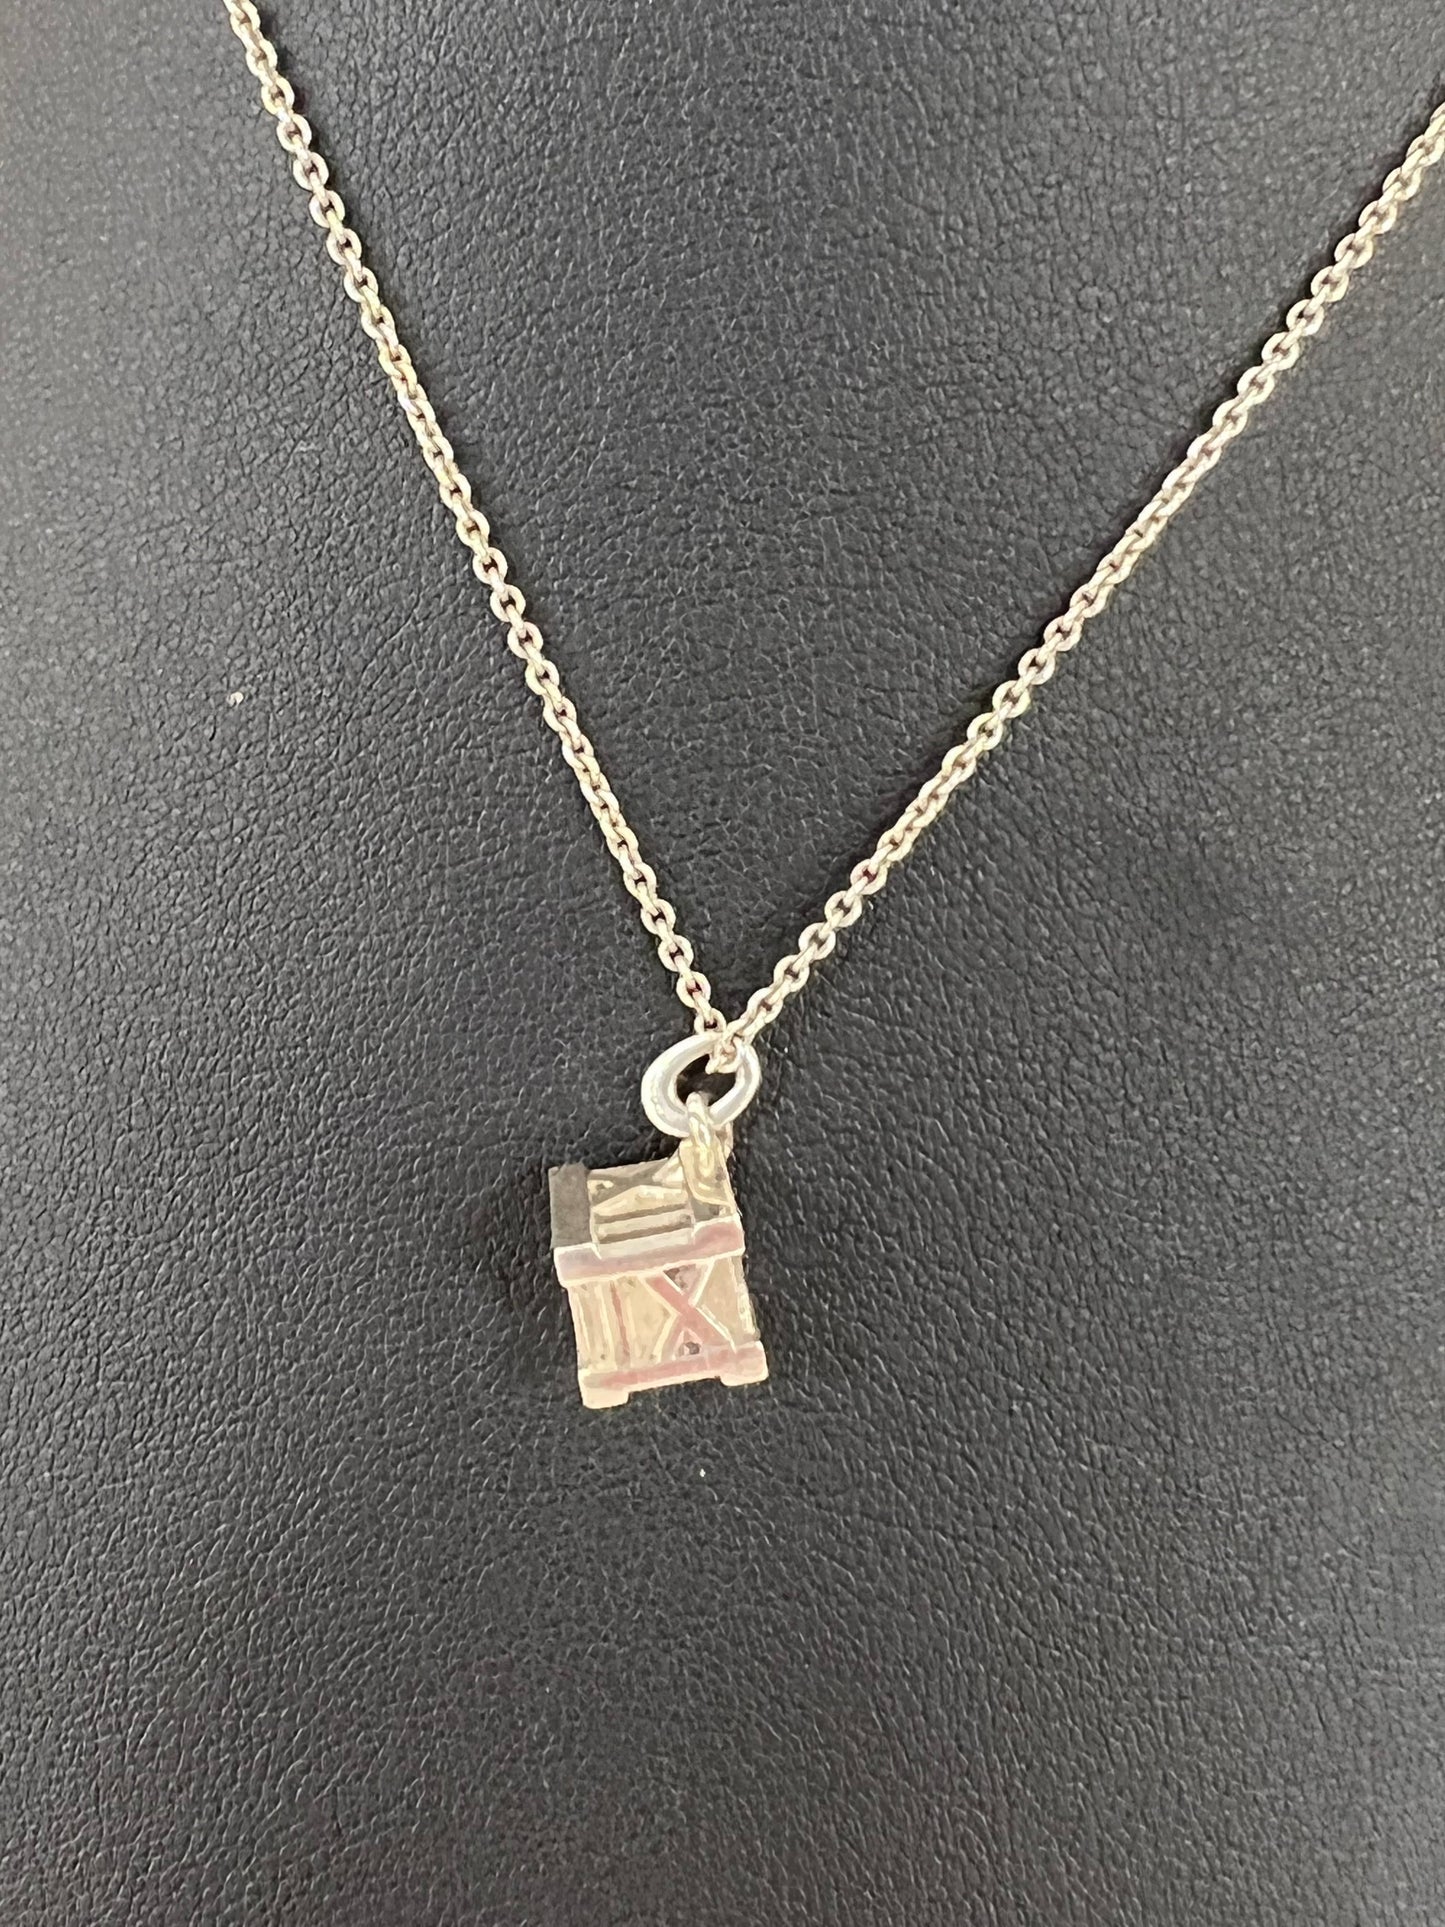 TIFFANY & CO. Sterling Silver "Atlas" Cube Pendant & Necklace